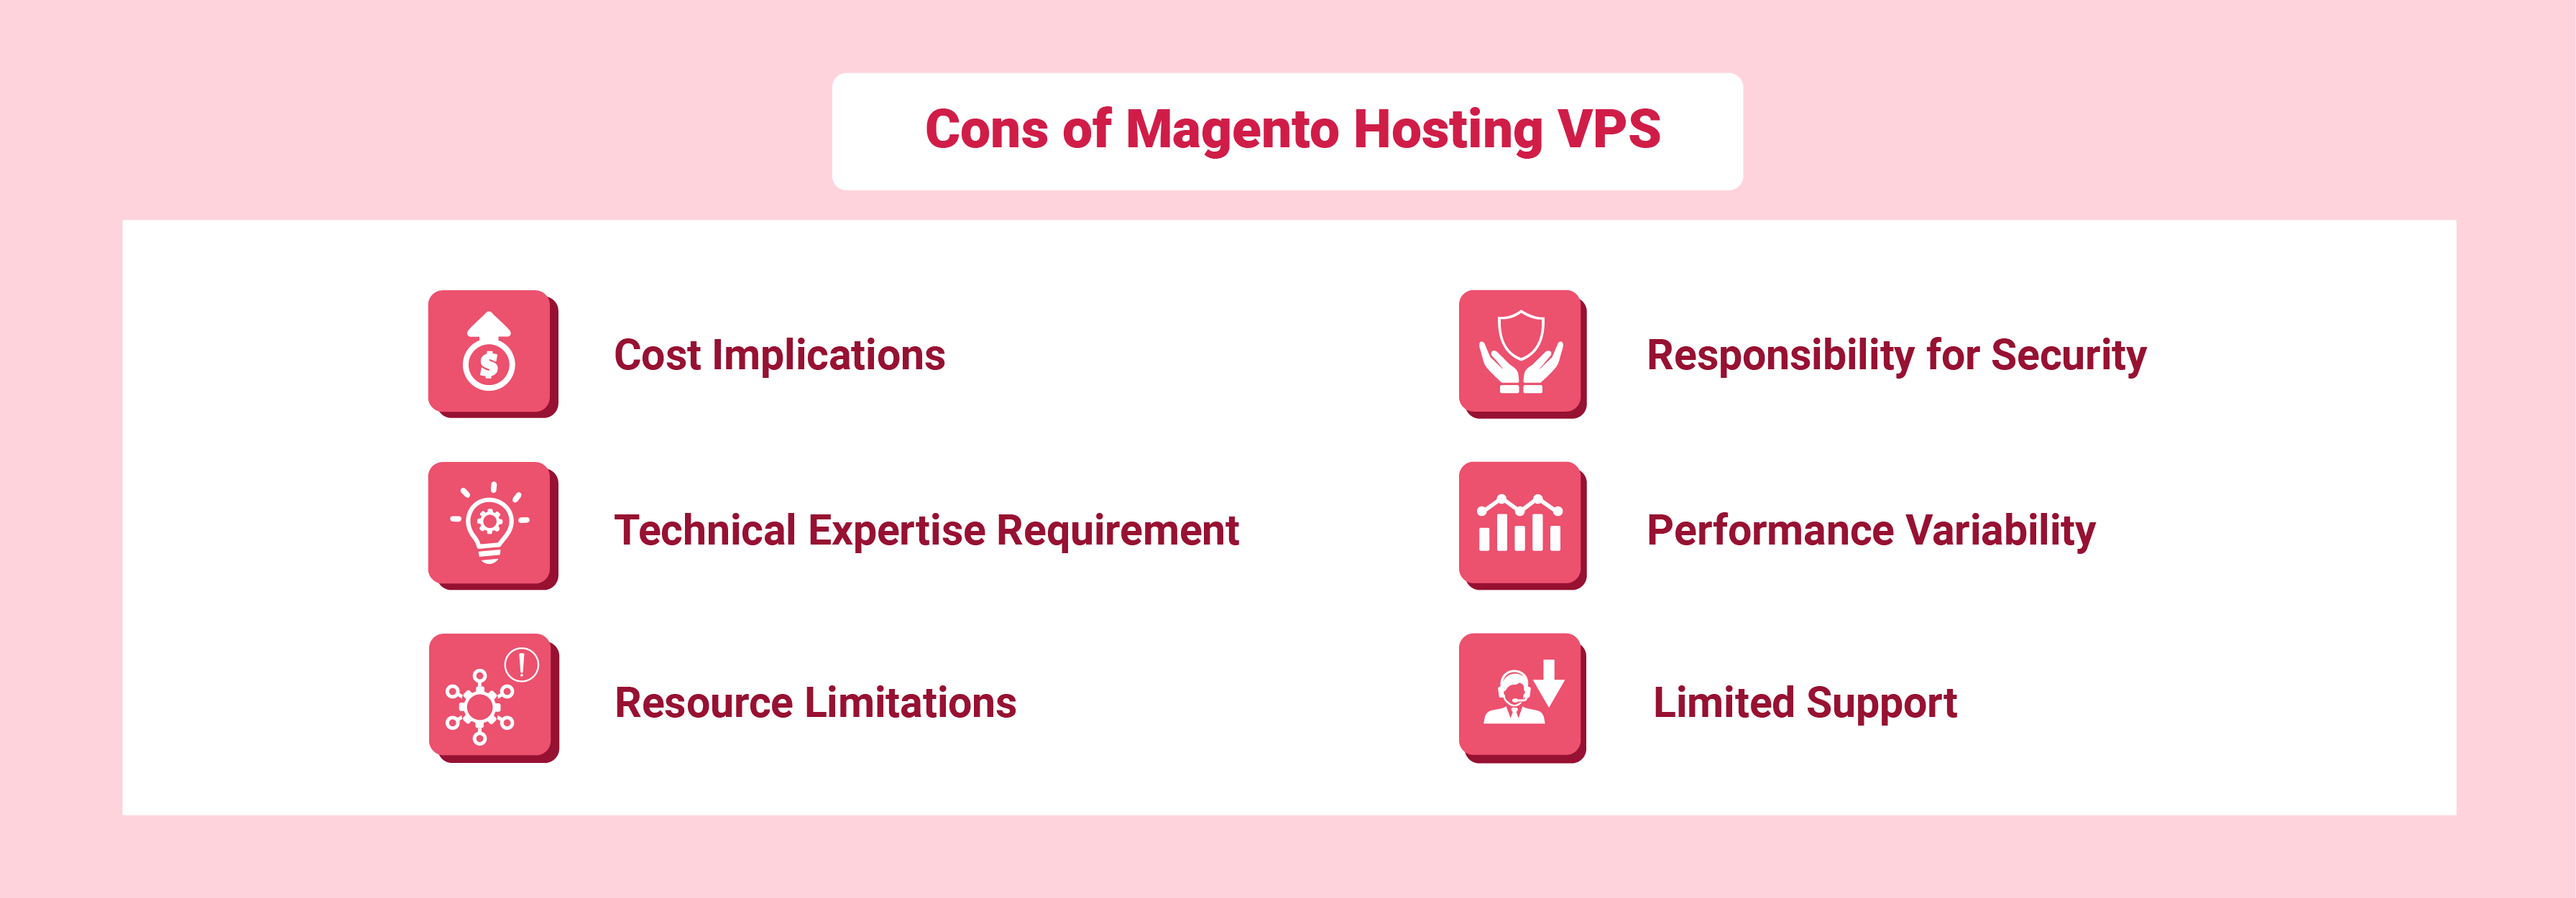 Cons of Magento Hosting VPS